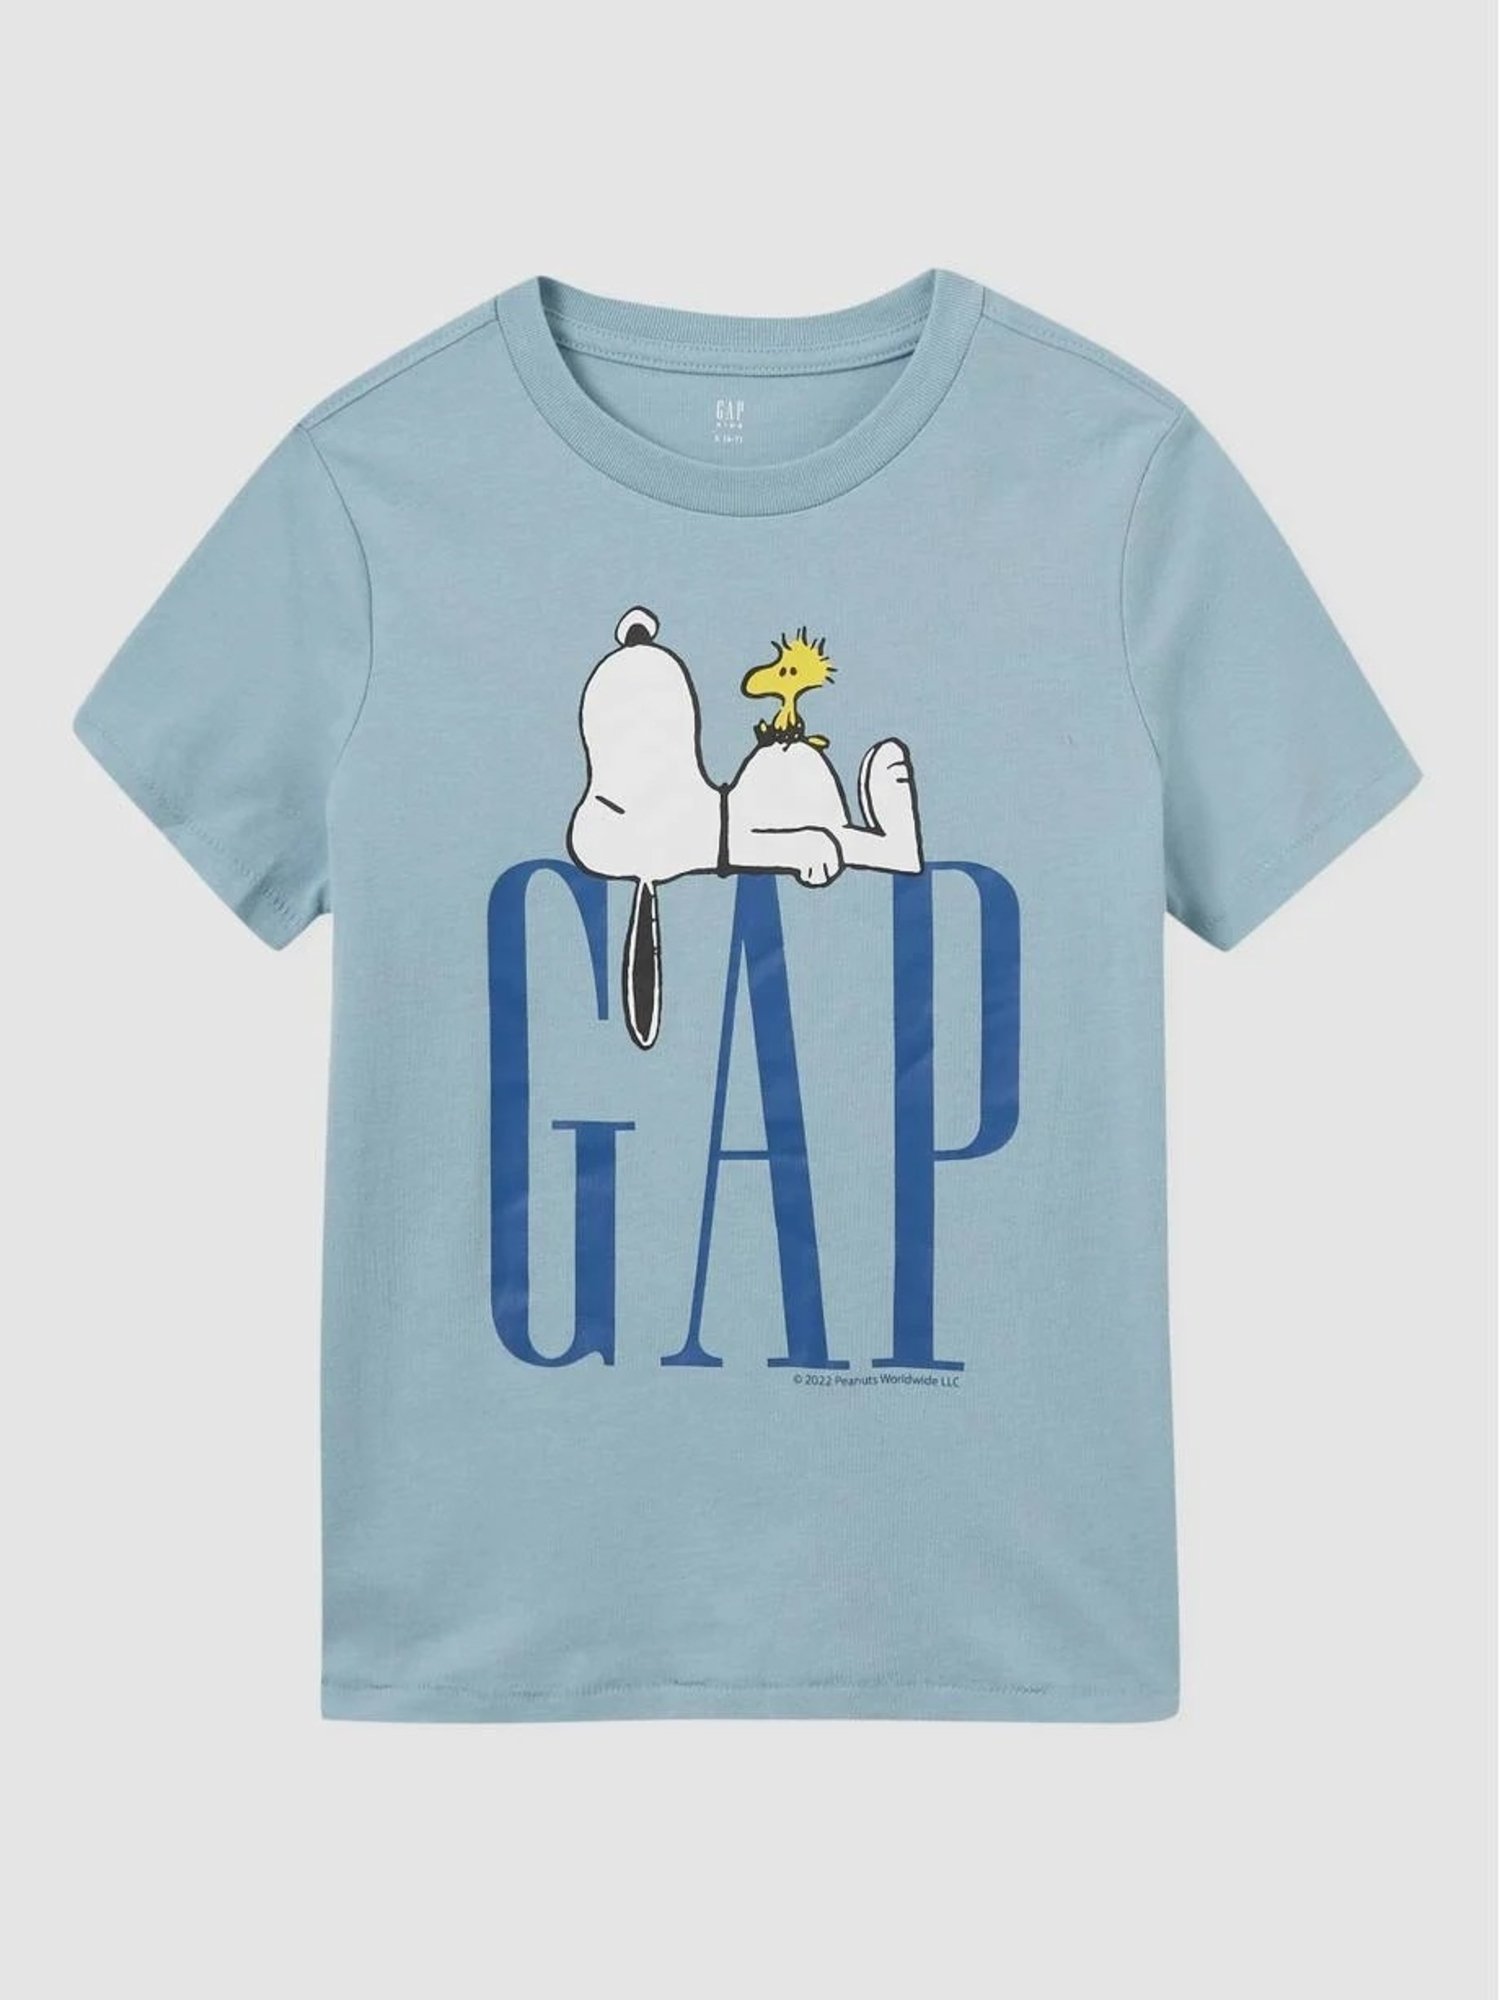 Peanuts X Gap Logo T-Shirt product image